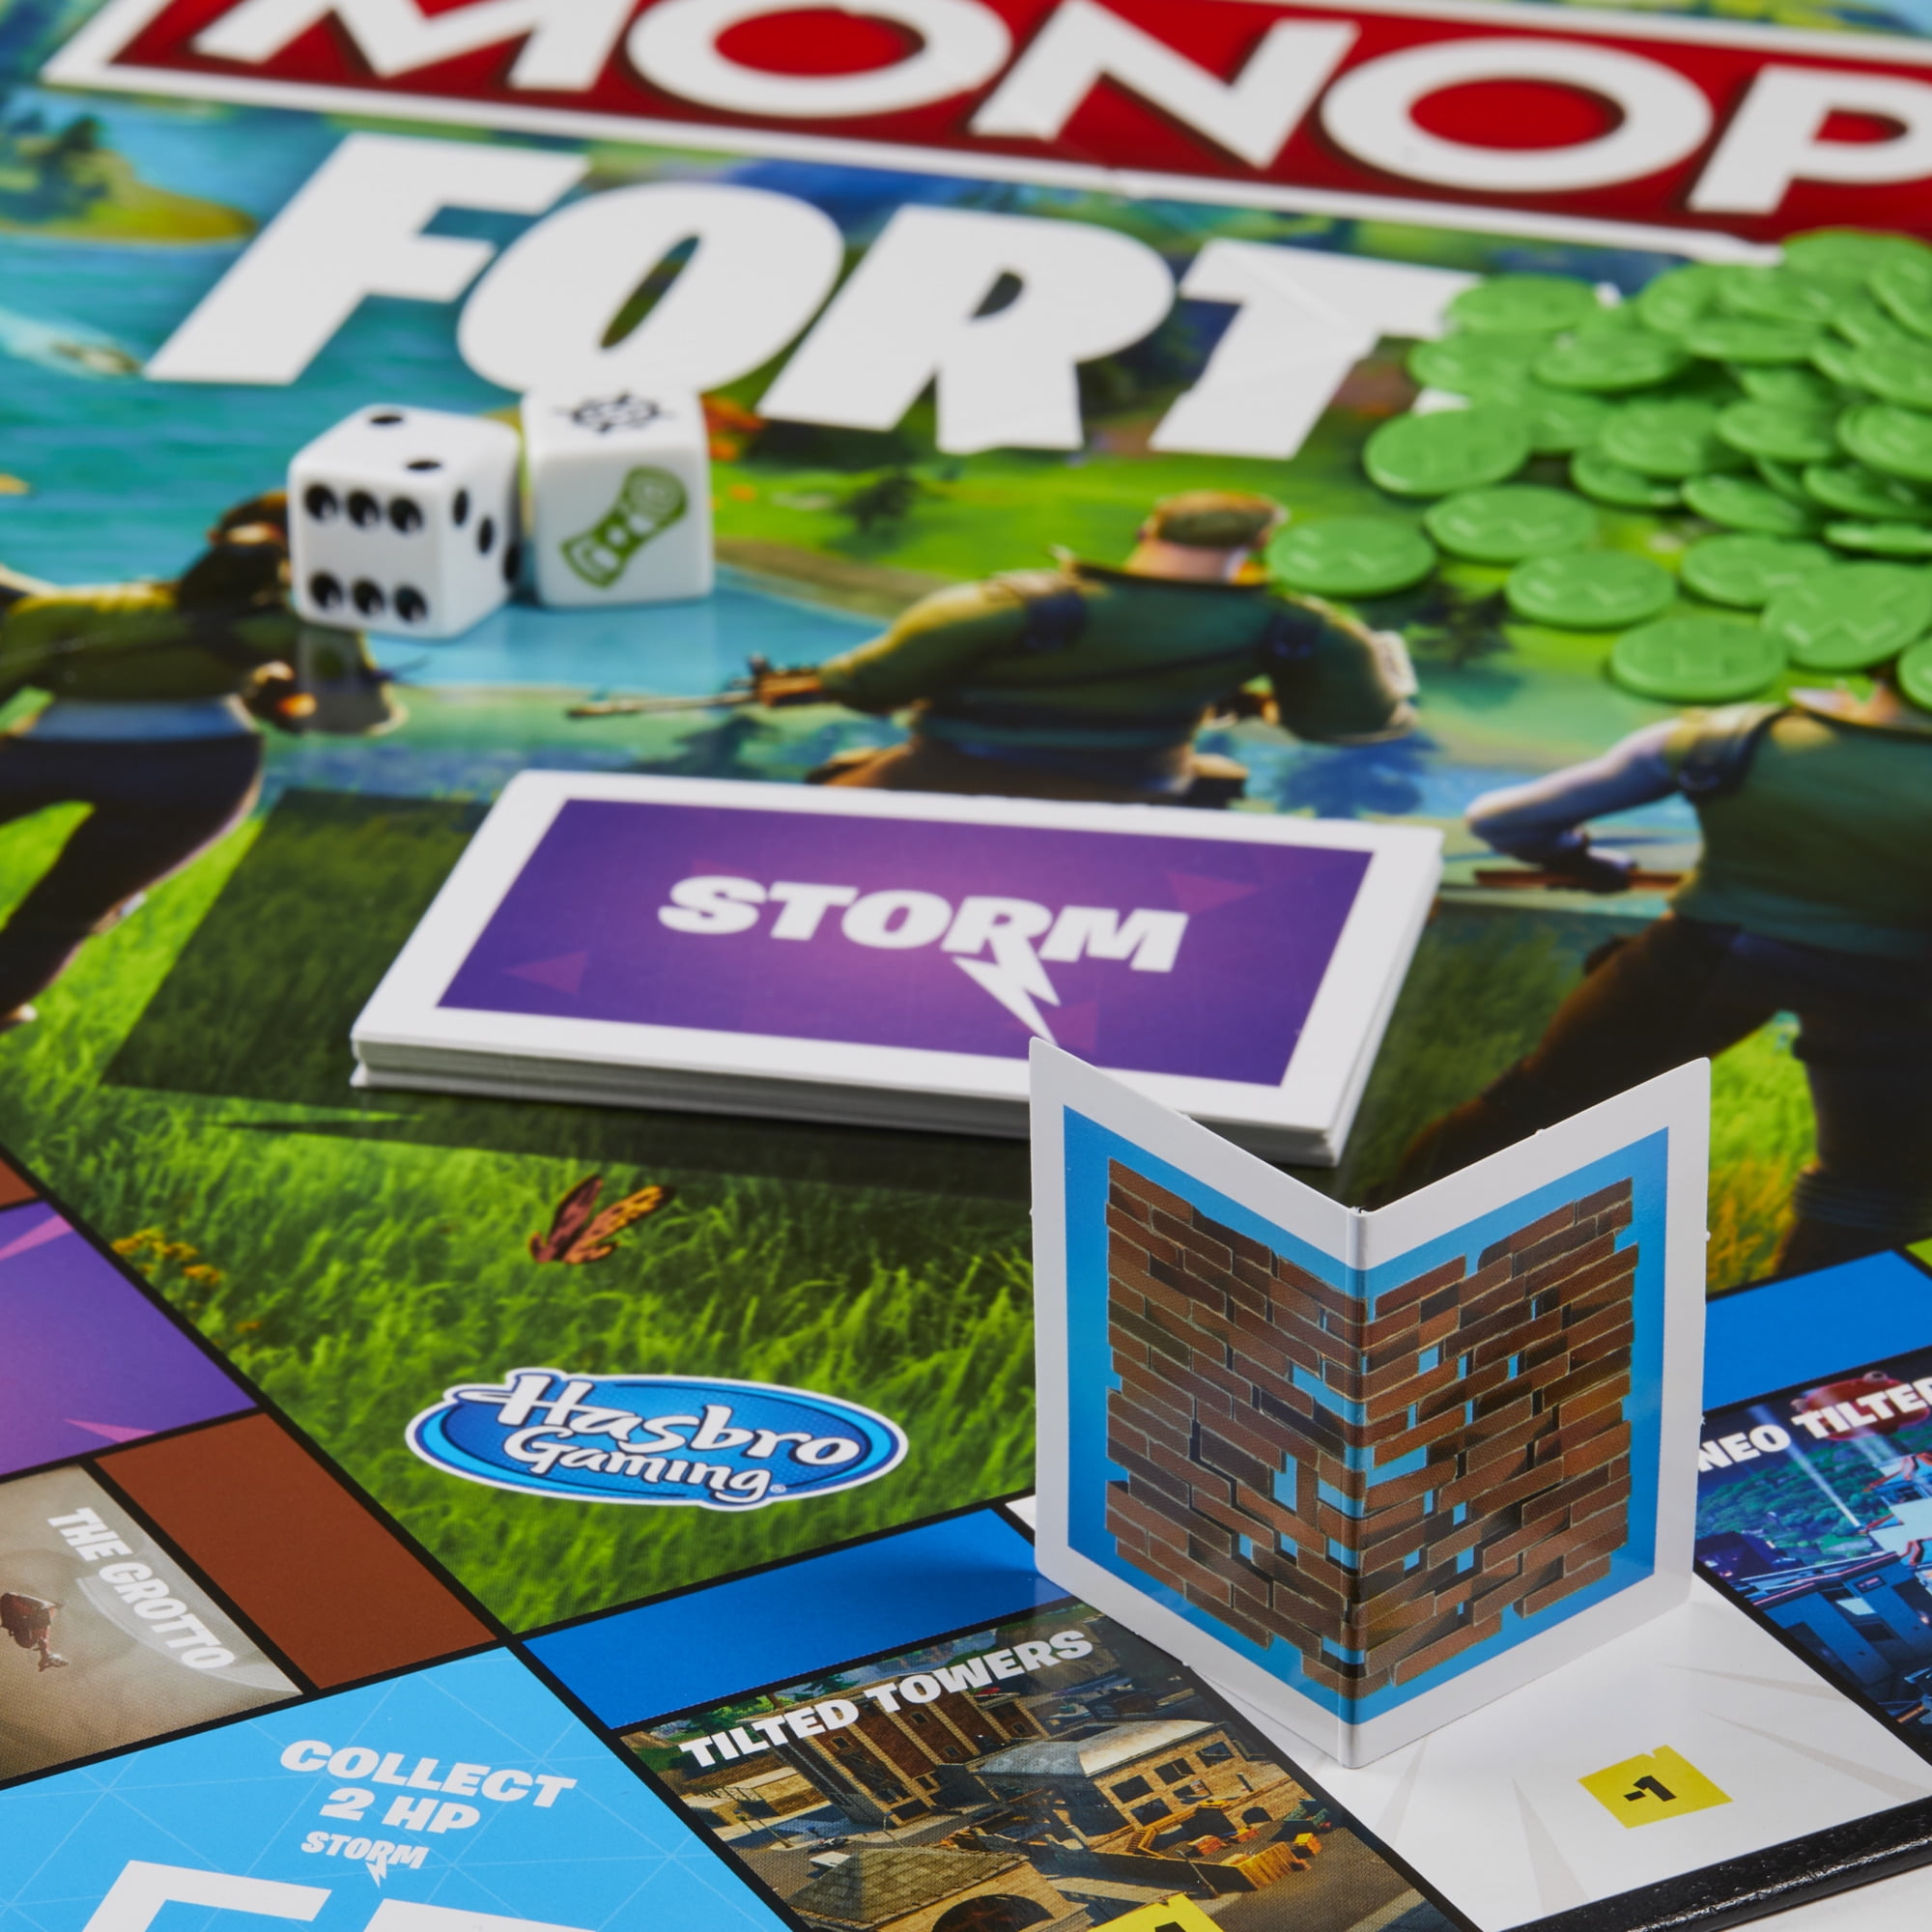 Fortnite Monopoly Board Game Limited Edition Dmg Box 